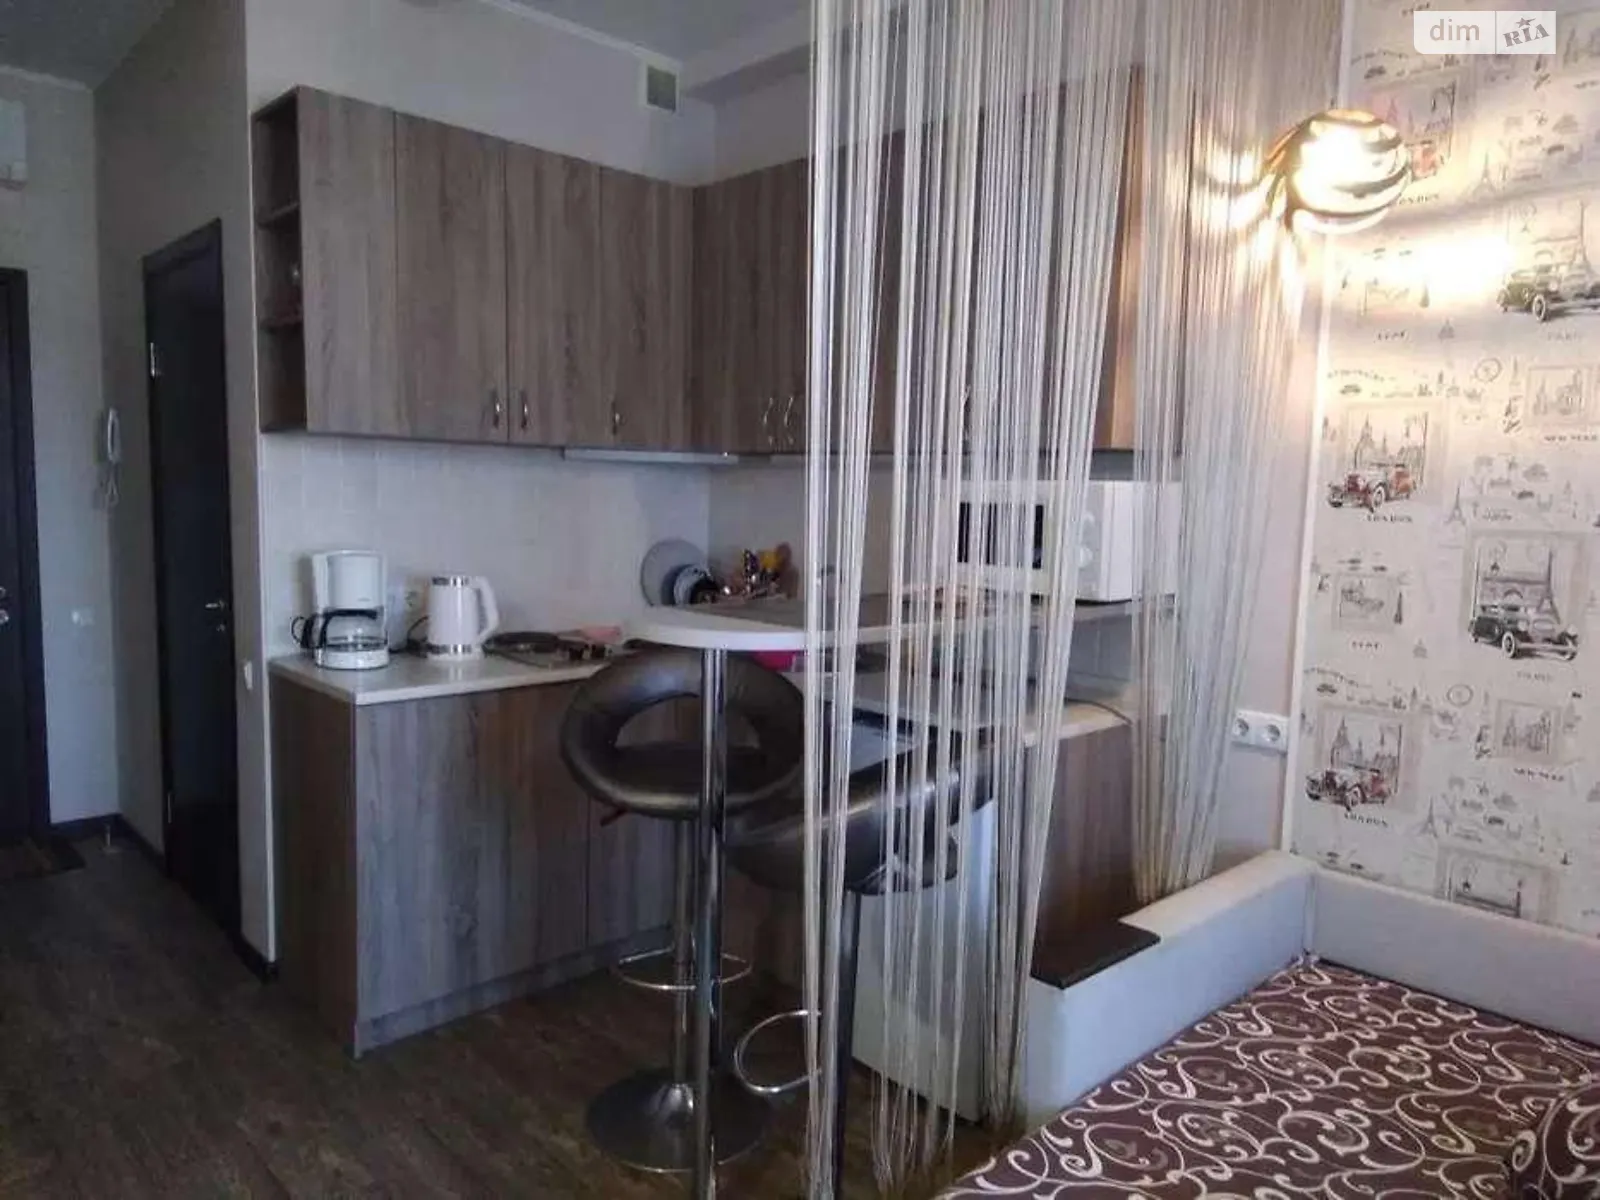 Продается комната 17 кв. м в Харькове - фото 2